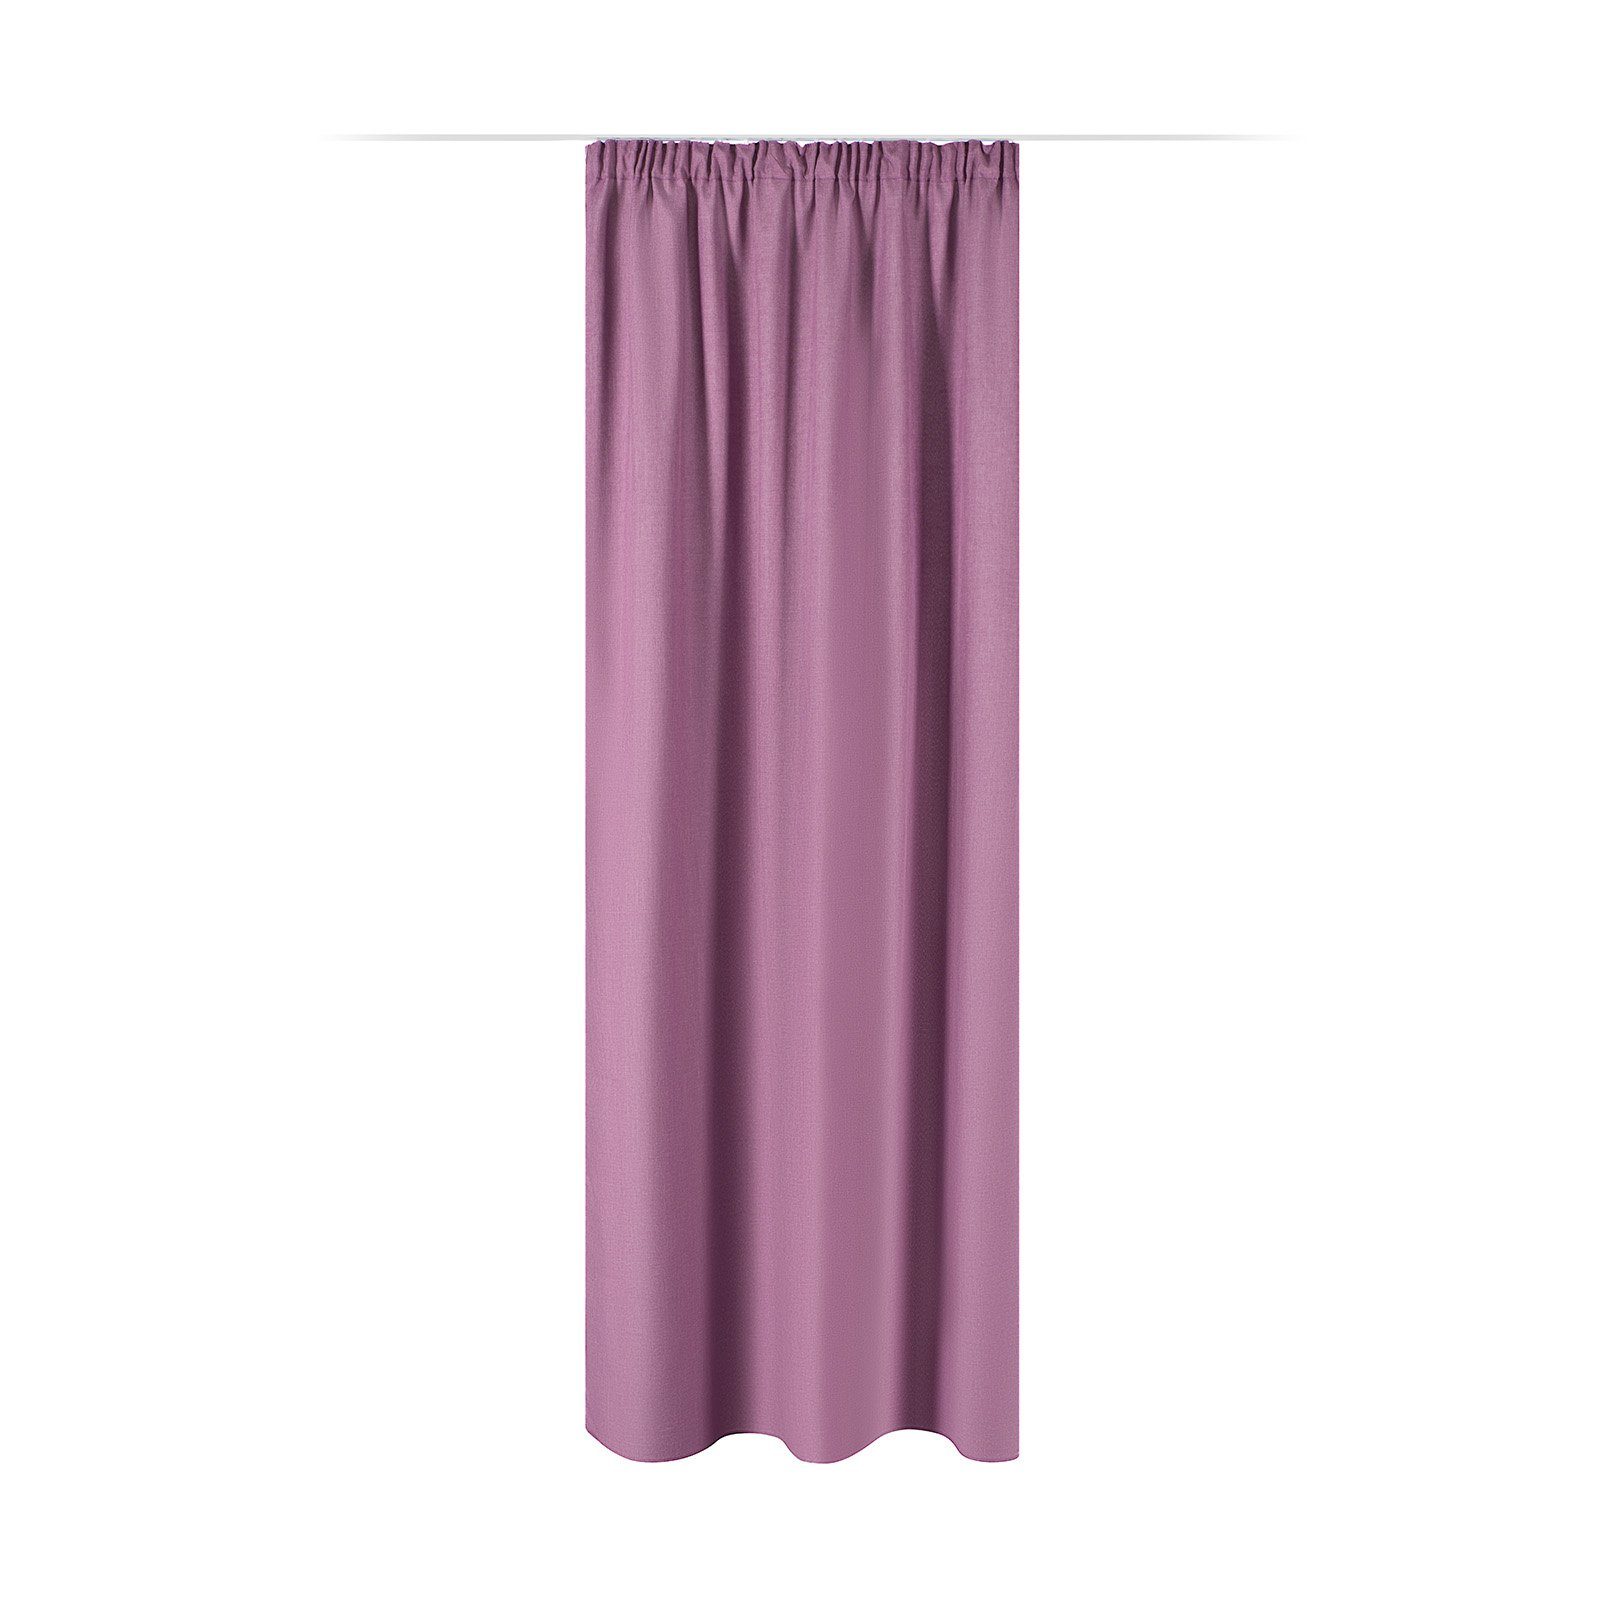 Vorhang Blickdichter Vorhang 140x245cm mit Kräuselband, JEMIDI Violett